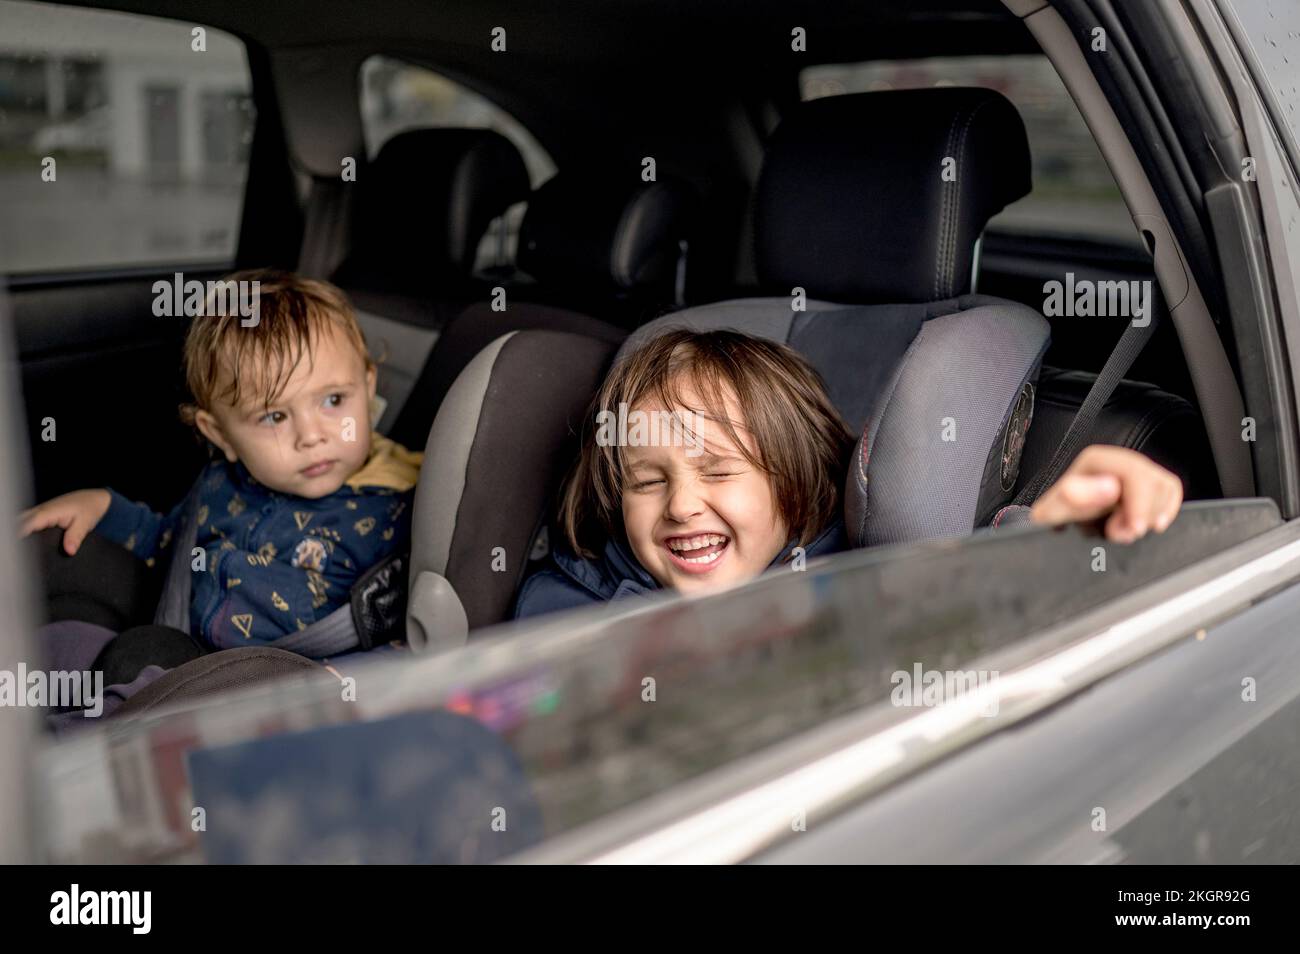 Siblings car -Fotos und -Bildmaterial in hoher Auflösung – Alamy